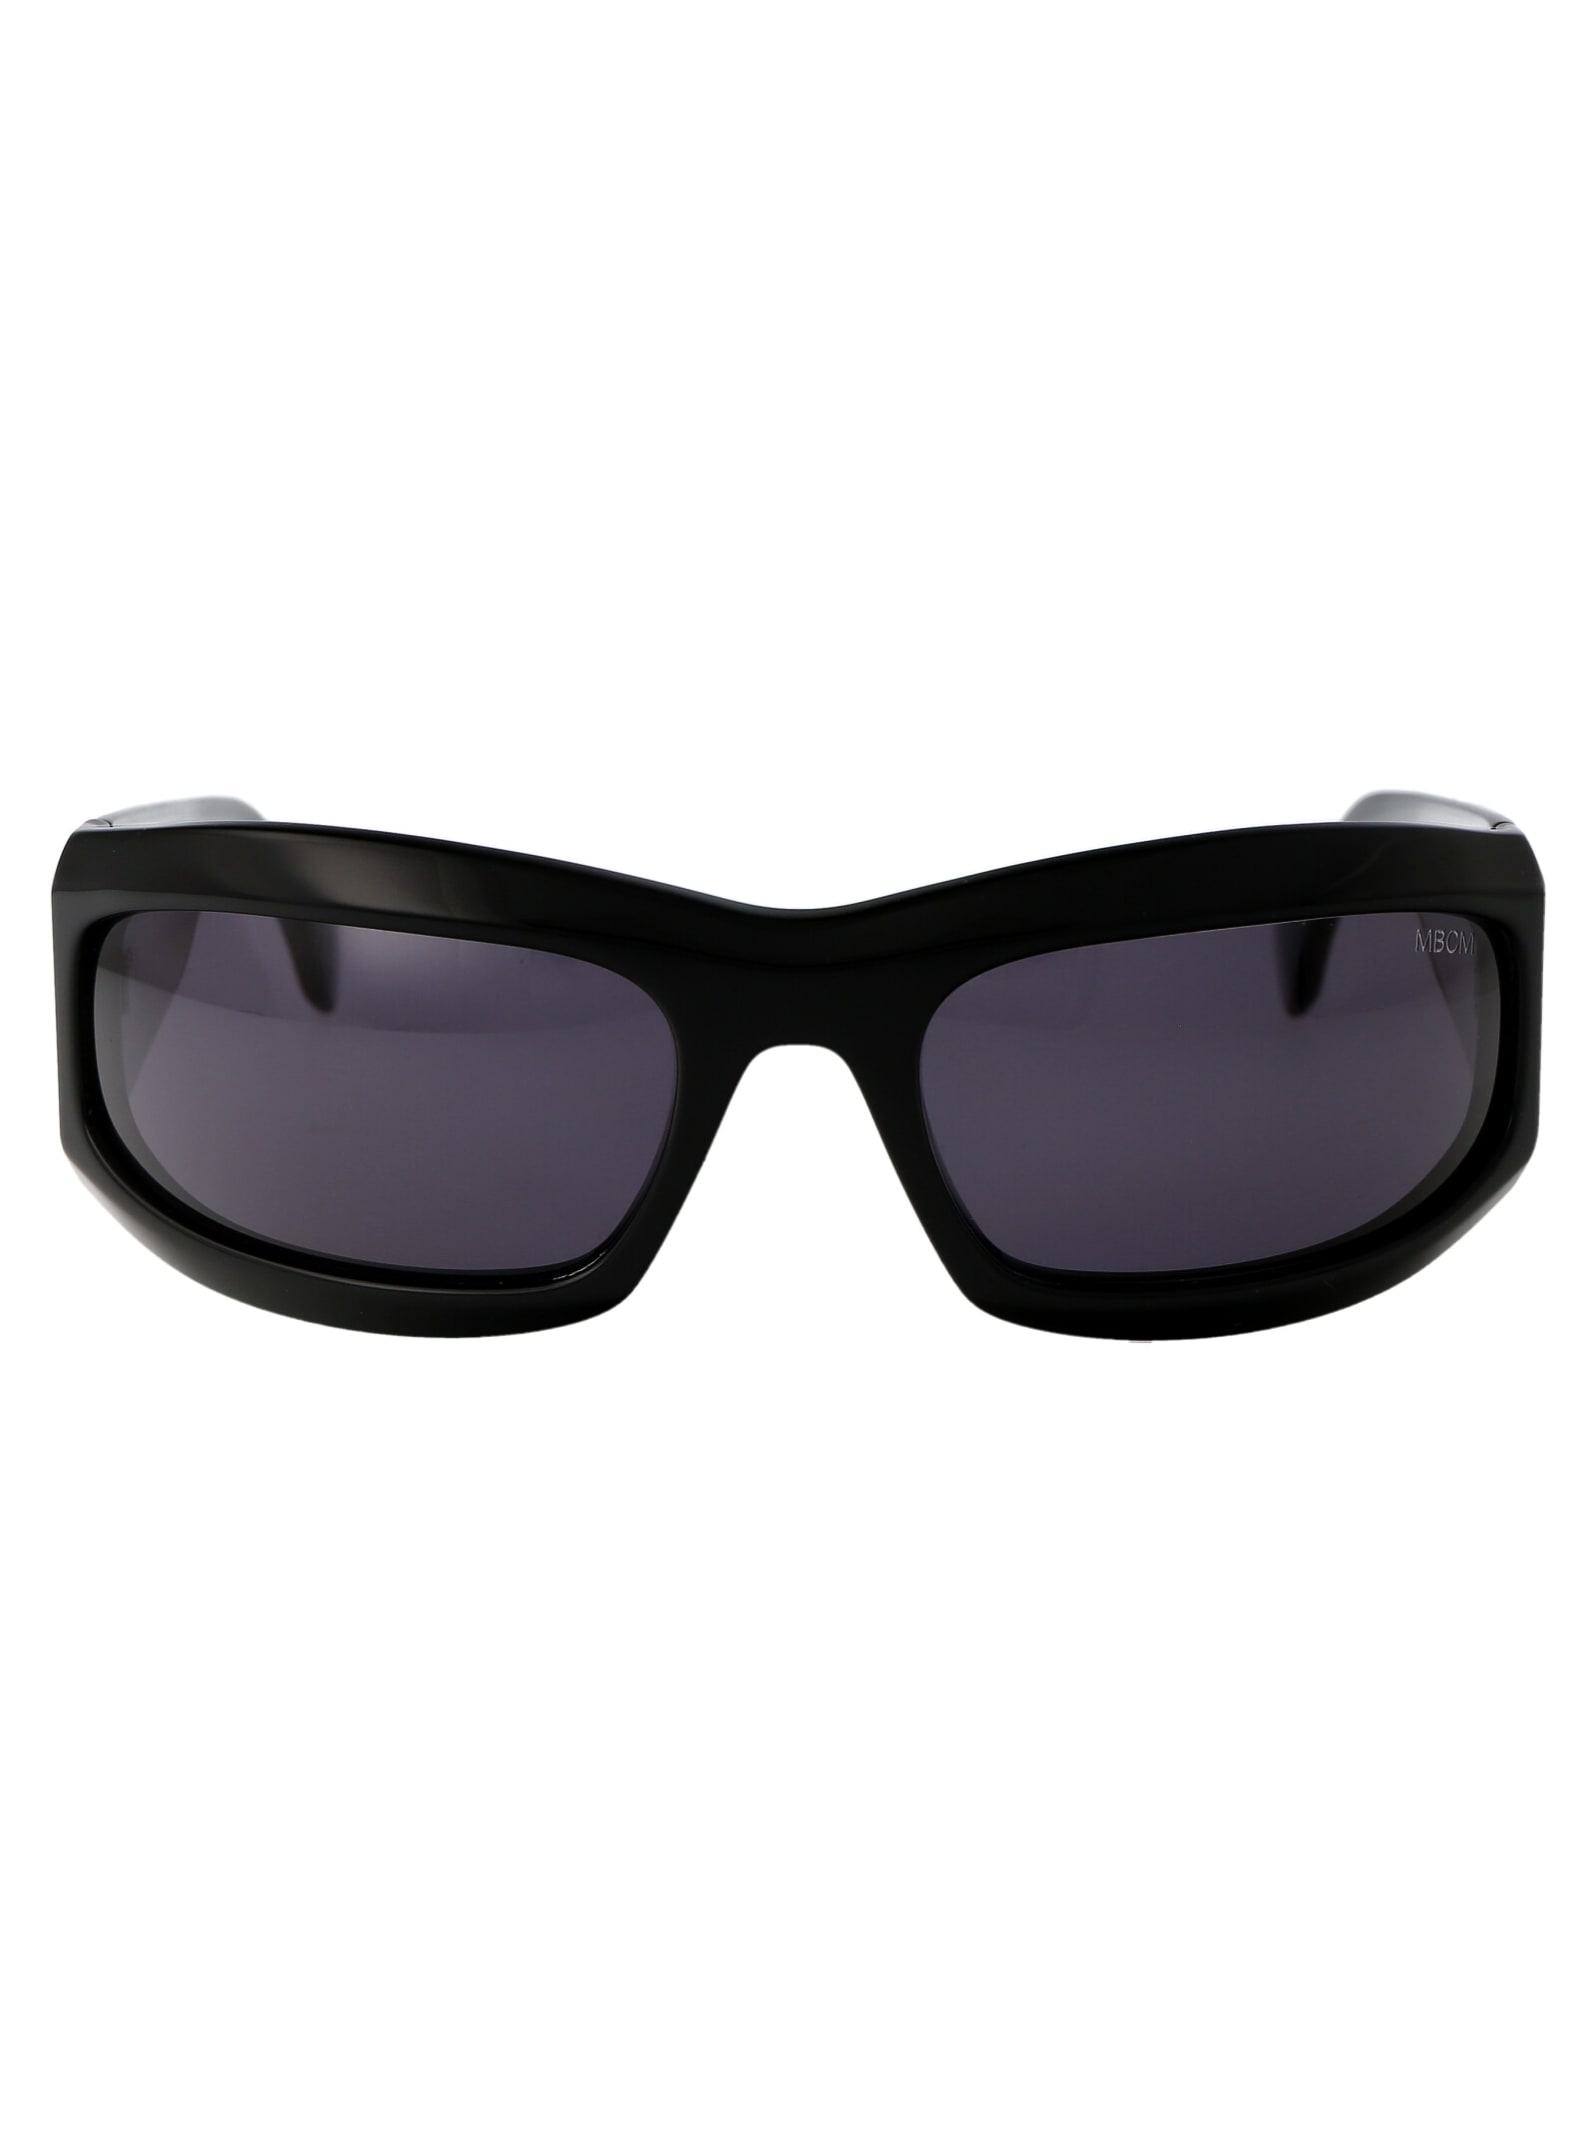 Catemu Sunglasses